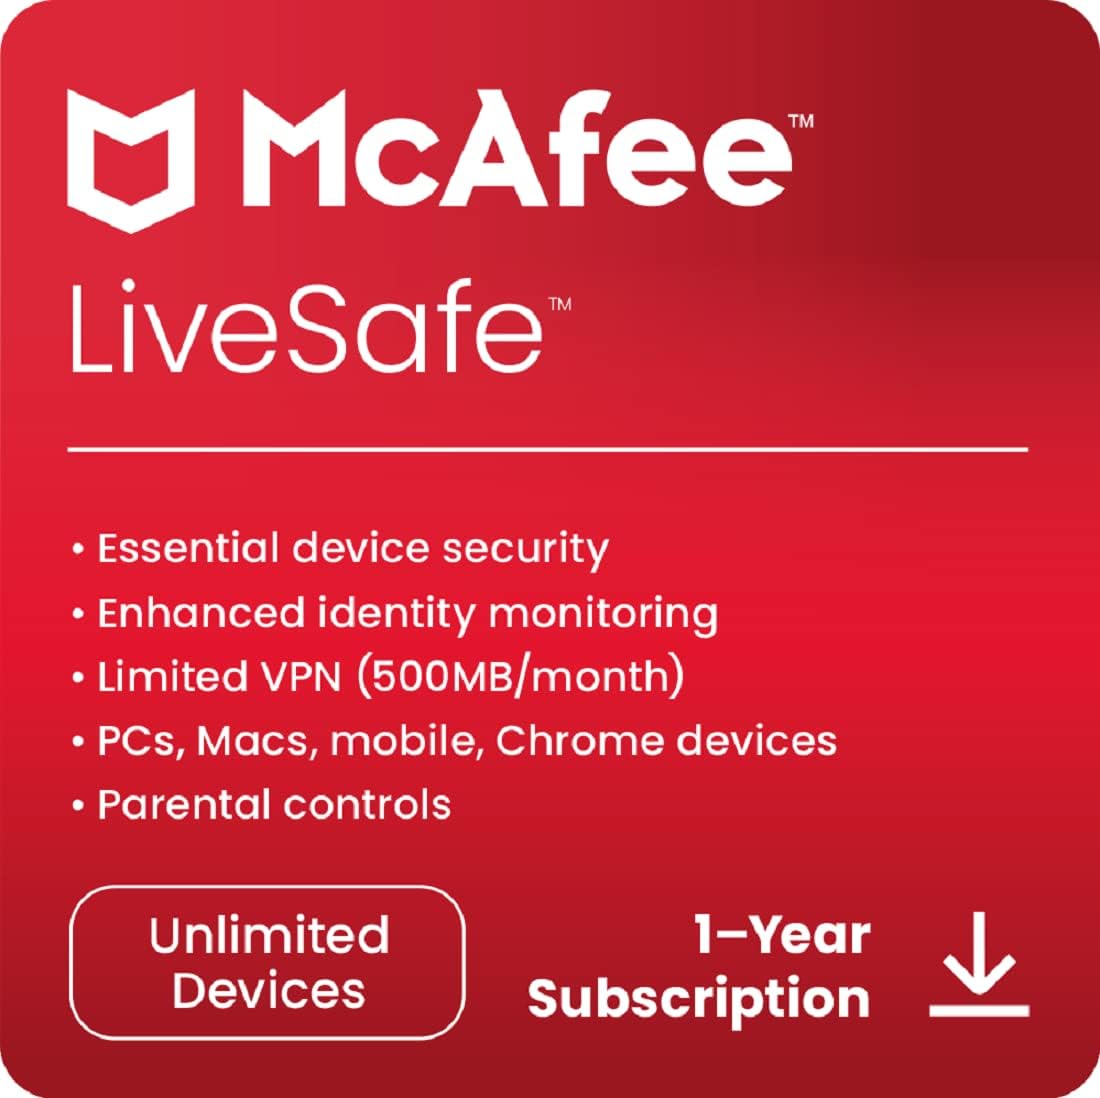 mcafee live safe